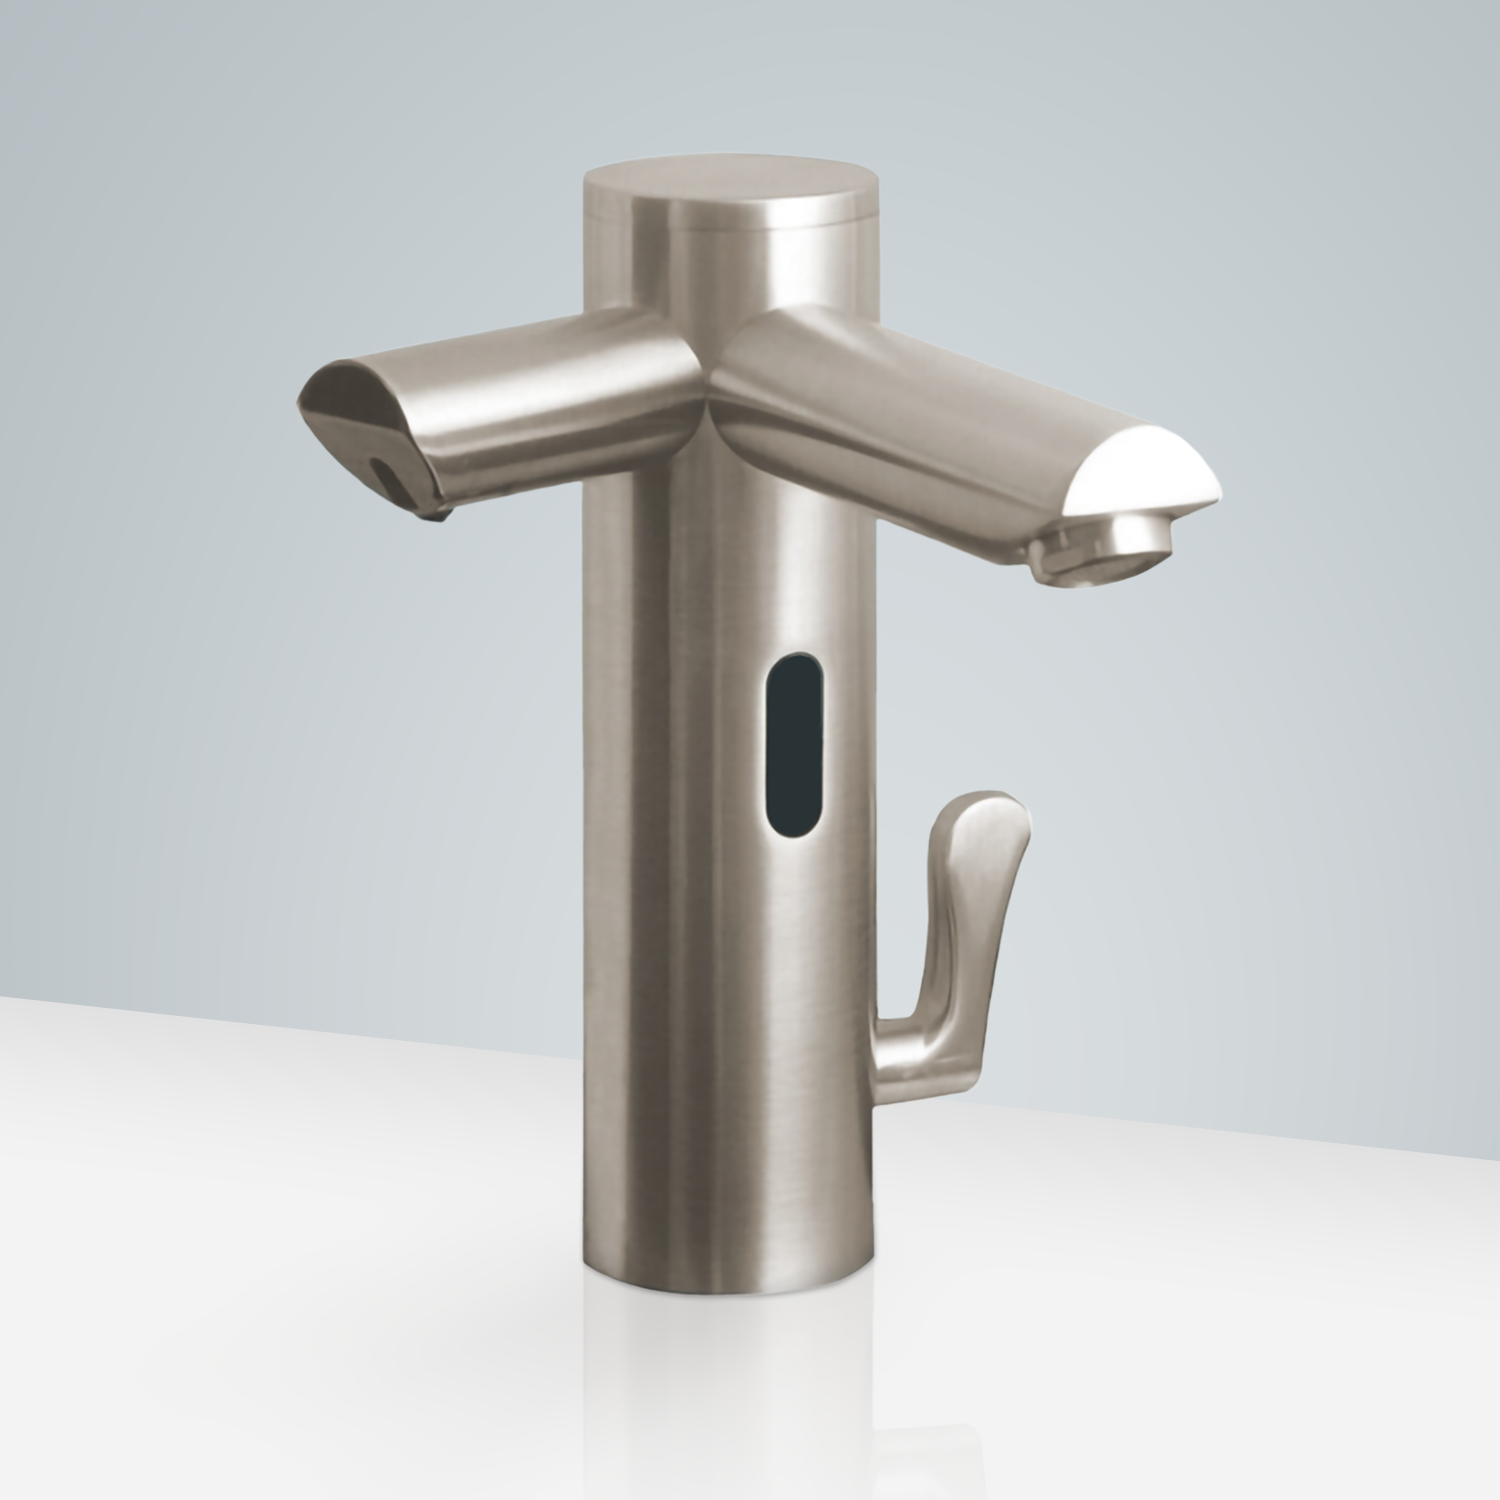 Fontana Lenox Dual Sensor Faucet with Sensor Soap Dispenser Brushed Nickel